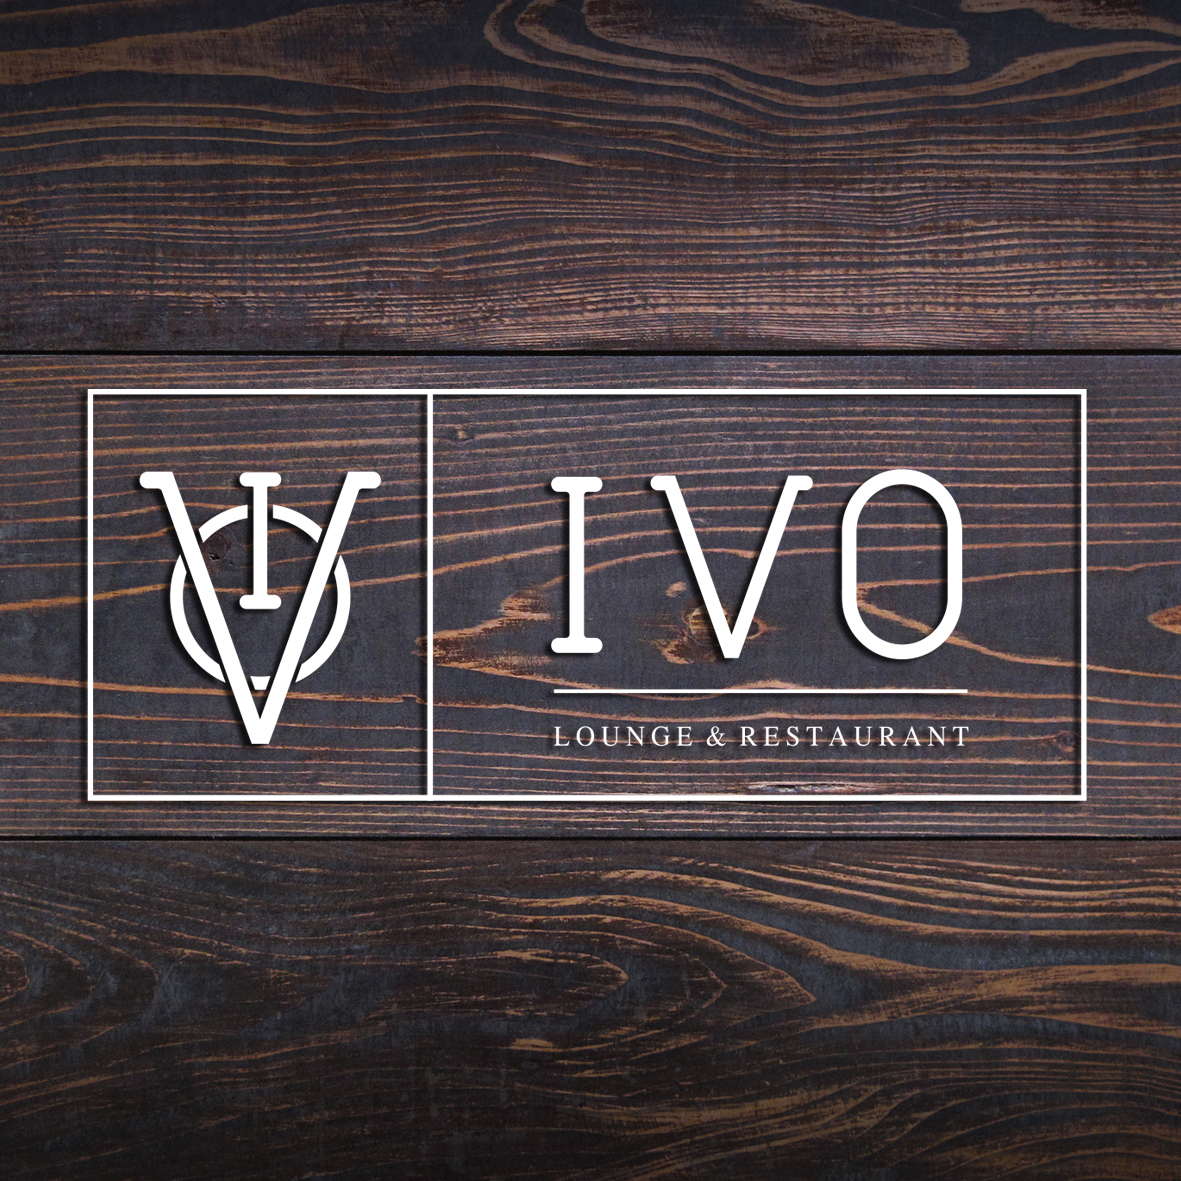 Ivo - Lounge & Restaurant